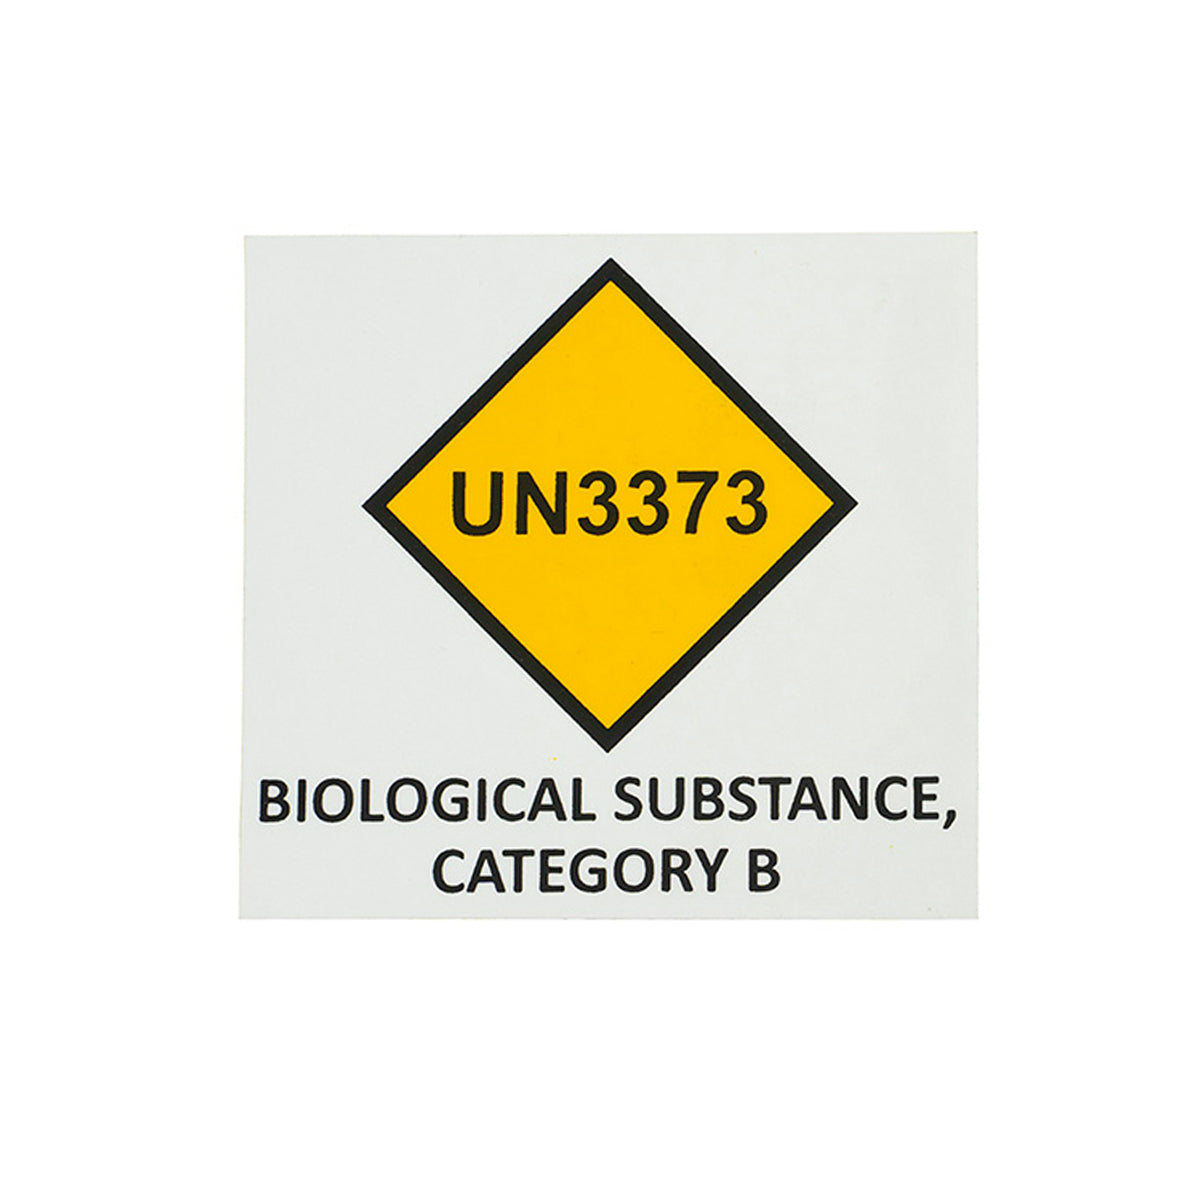 UN3373 Sticker for Blood in Transit Medical Carrier